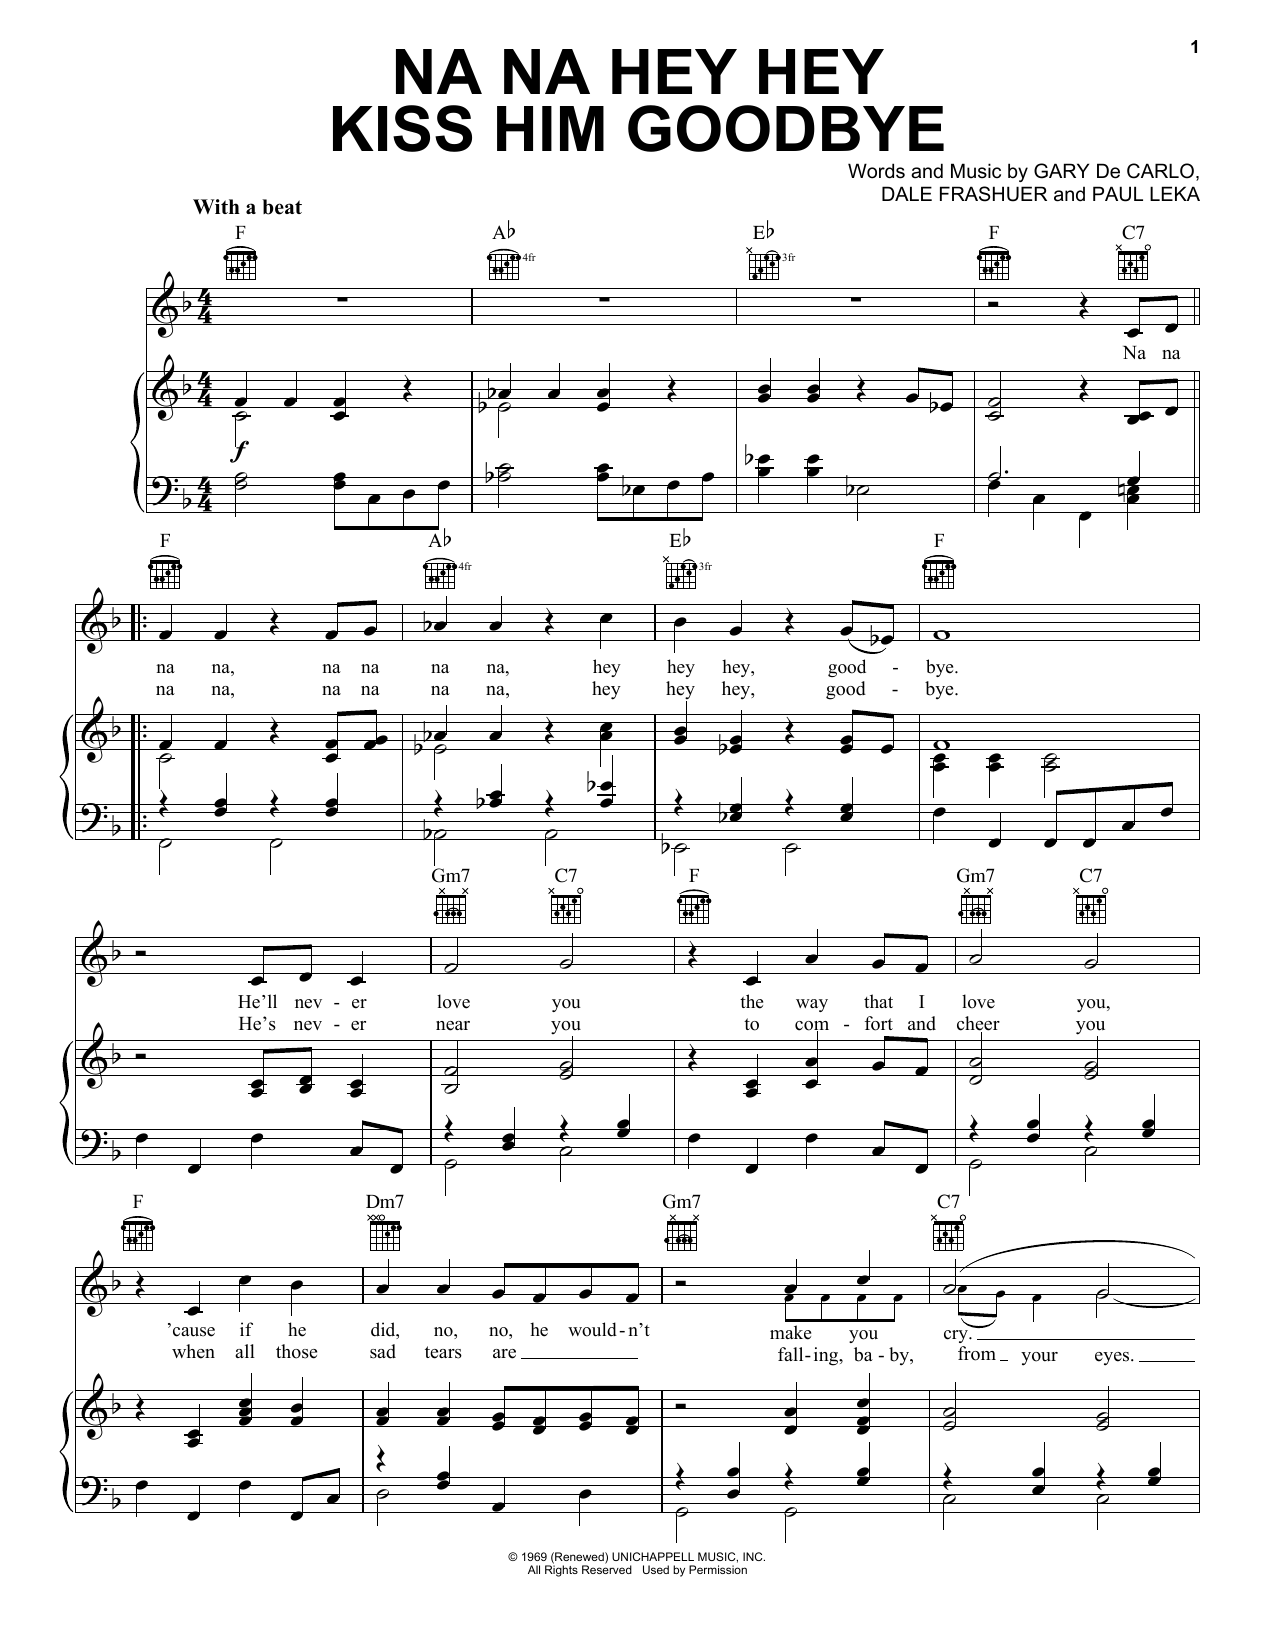 Download Steam Na Na Hey Hey Kiss Him Goodbye Sheet Music and learn how to play Trombone PDF digital score in minutes